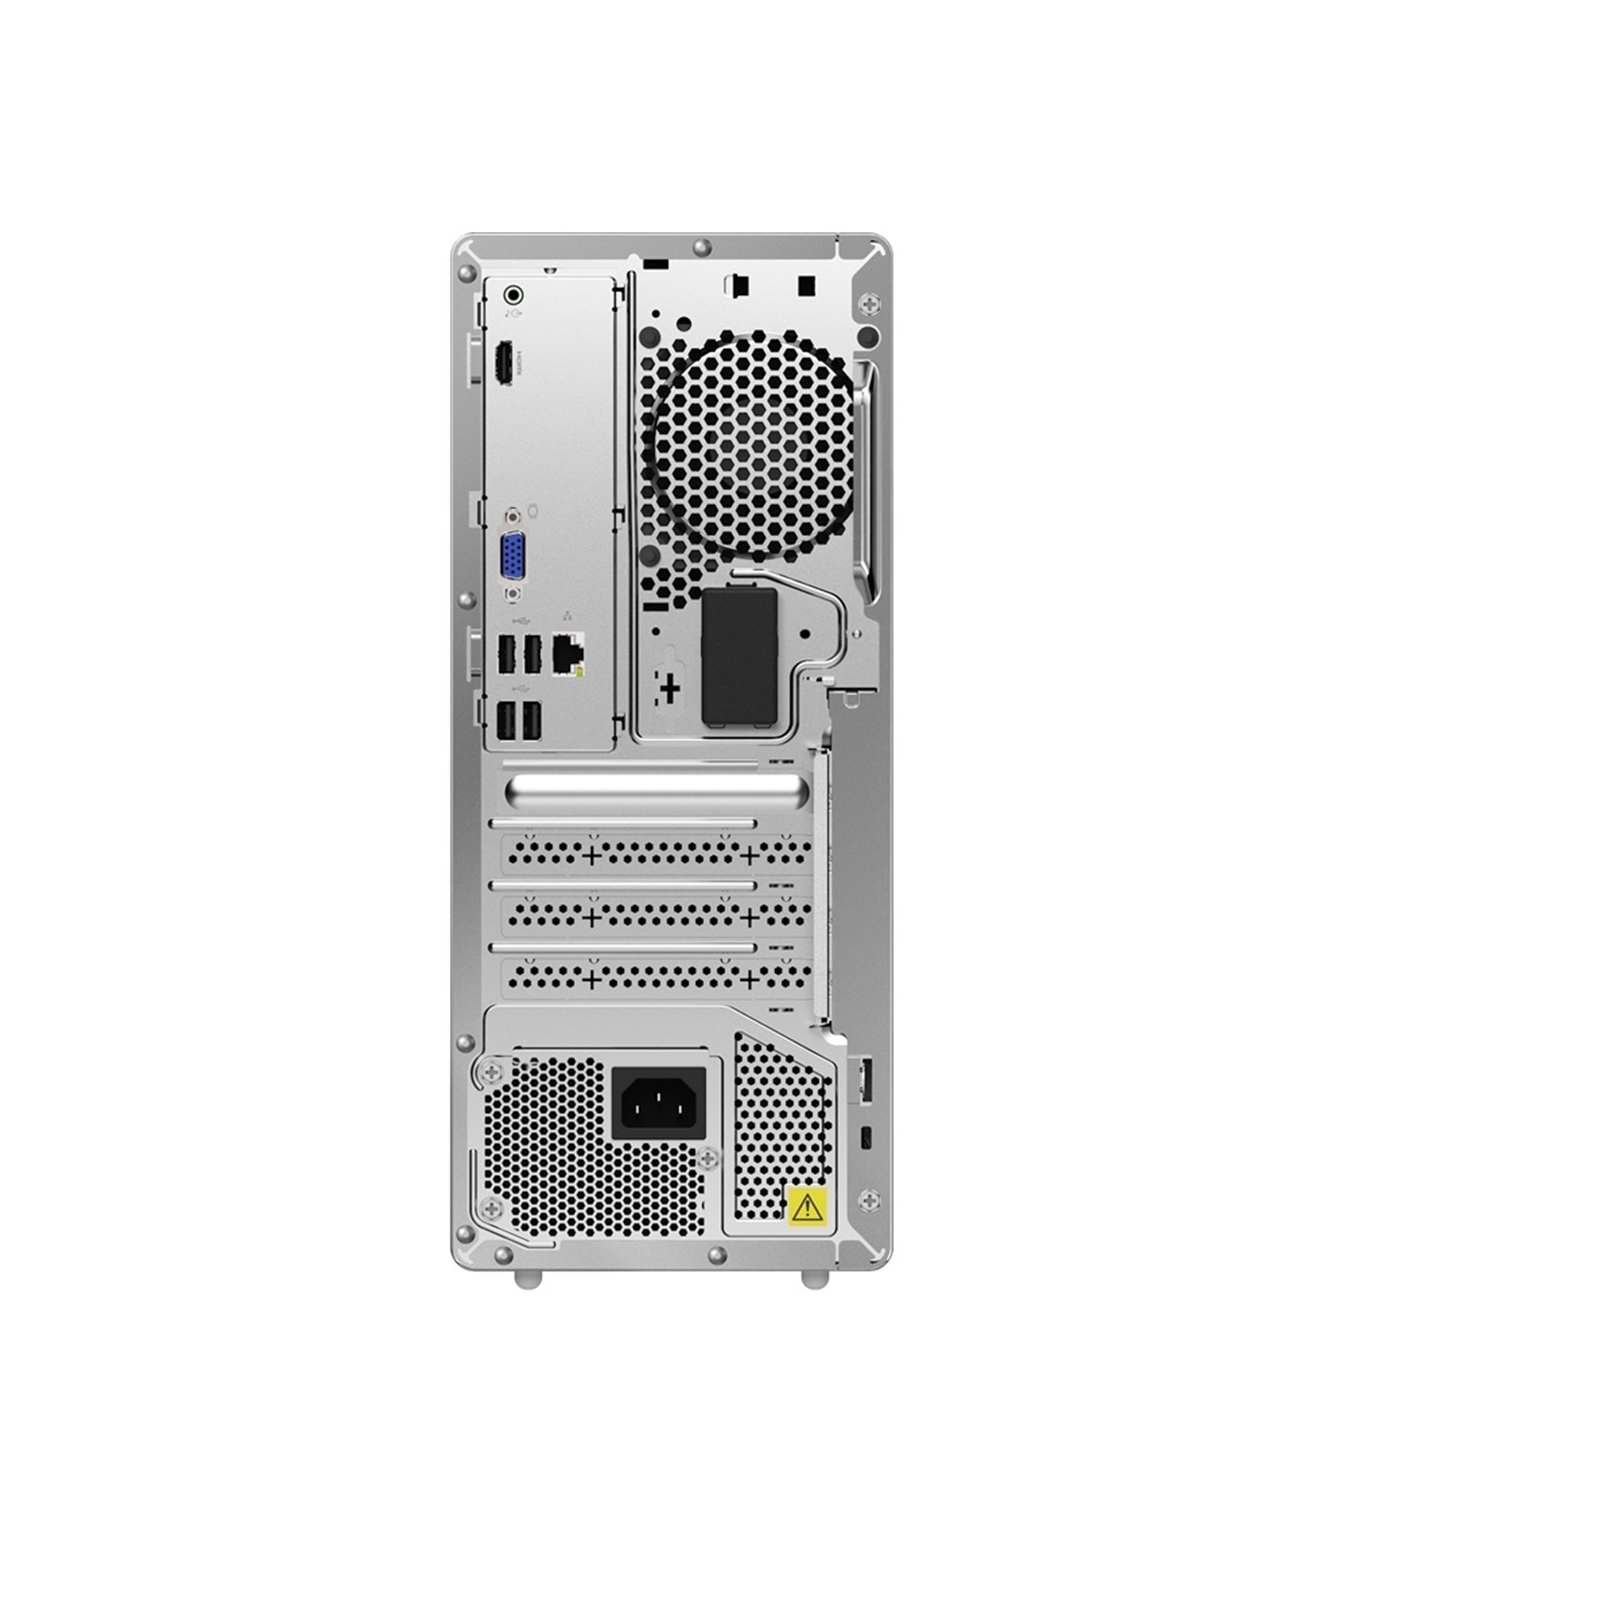 Lenovo IdeaCentre 5 Tower PC, Intel Core i3-10105 10th Gen, 4GB RAM, 256GB SSD, Windows 10 Home, Grey